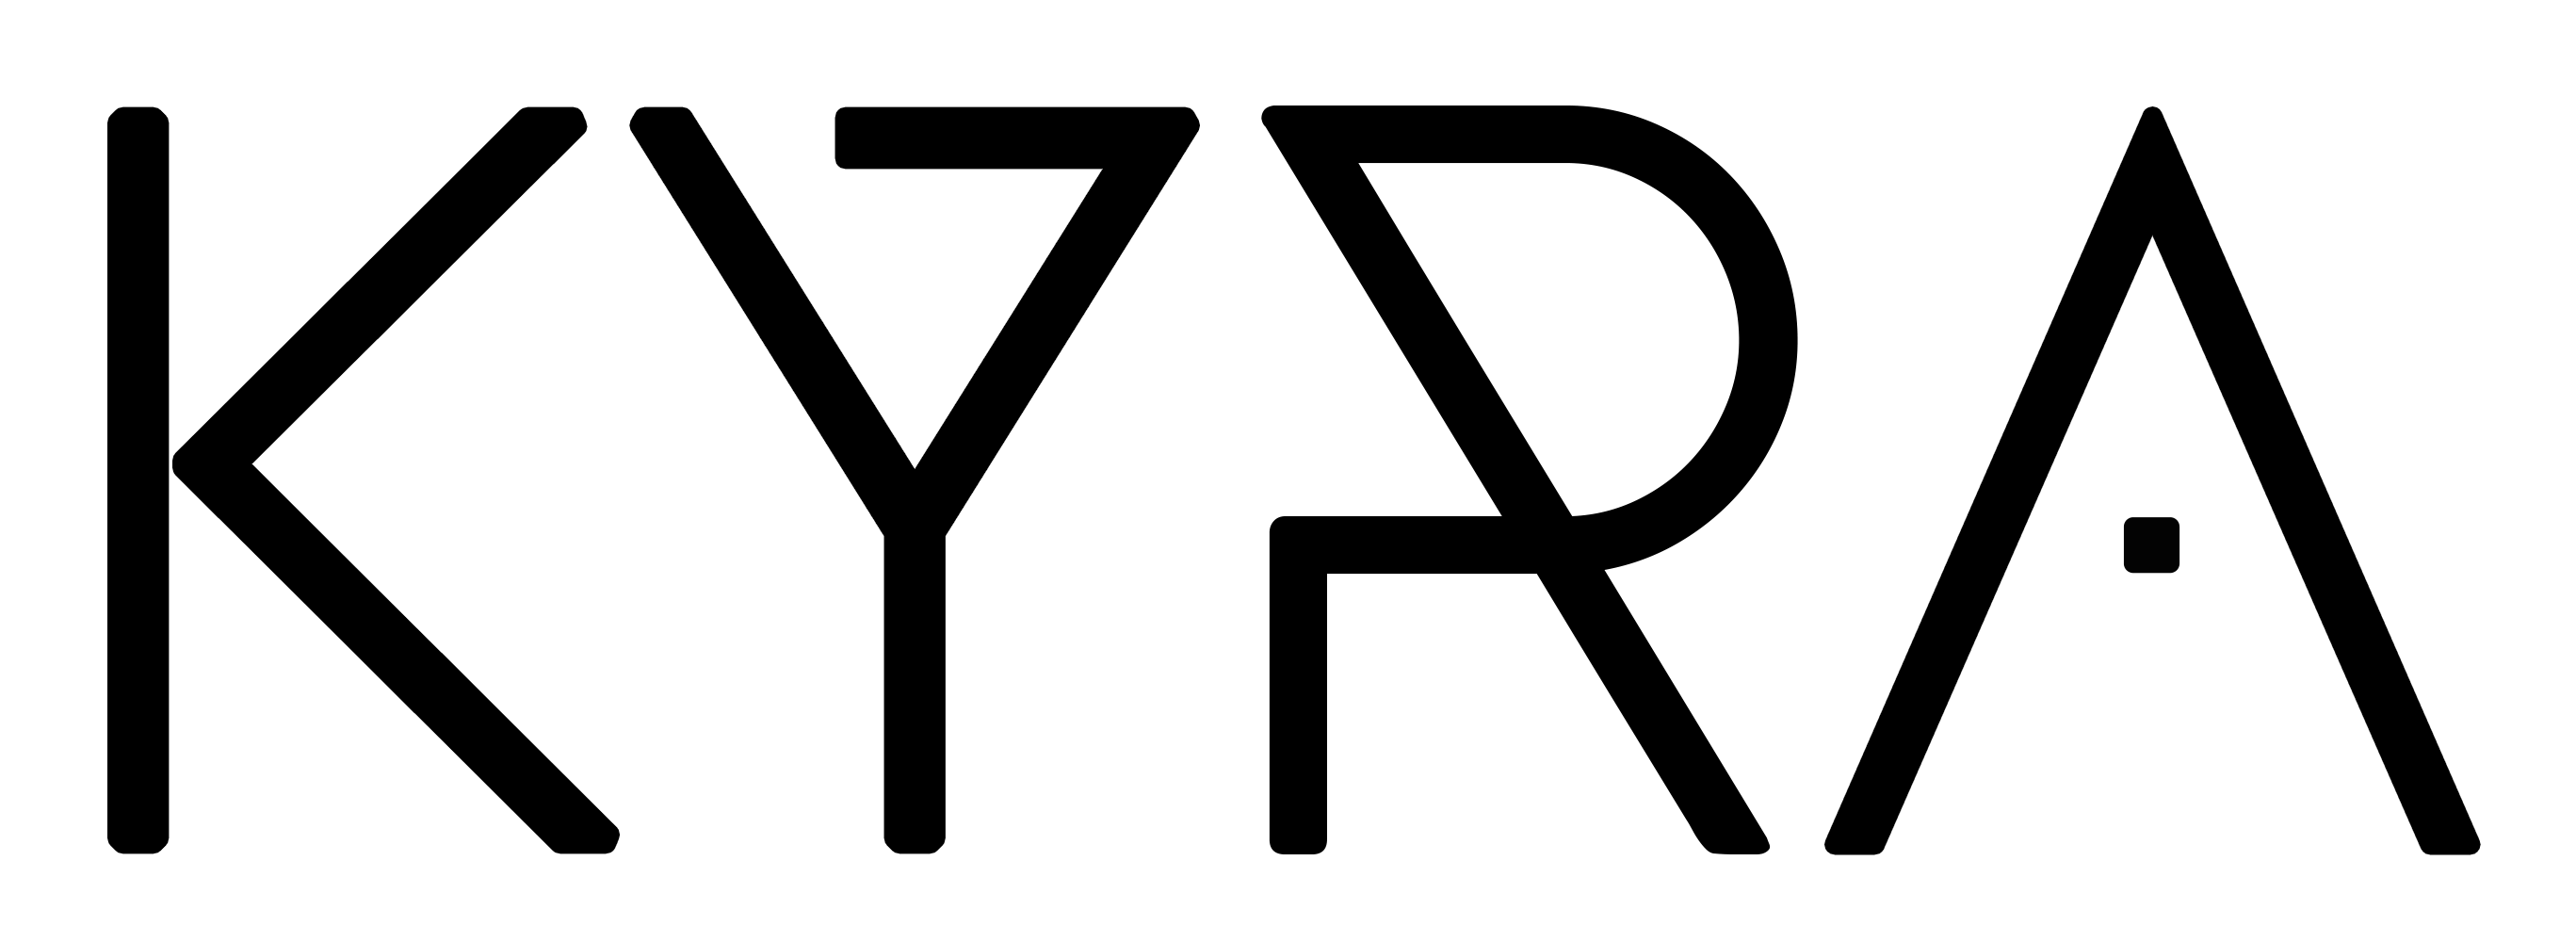 Kyra Logo - Biography